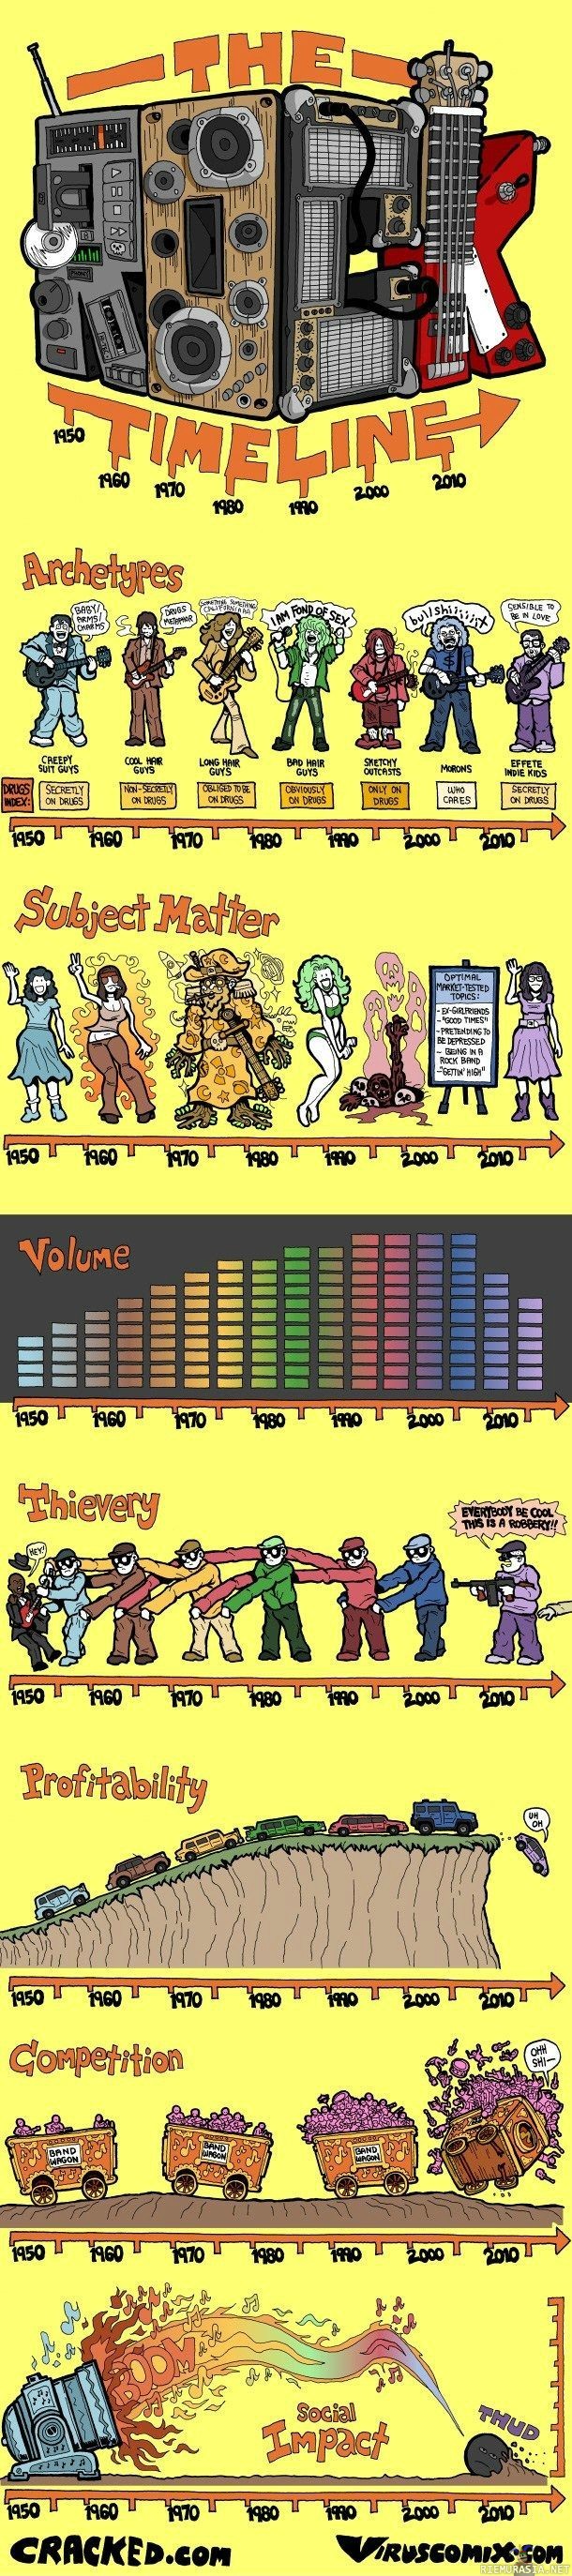 Timeline of music